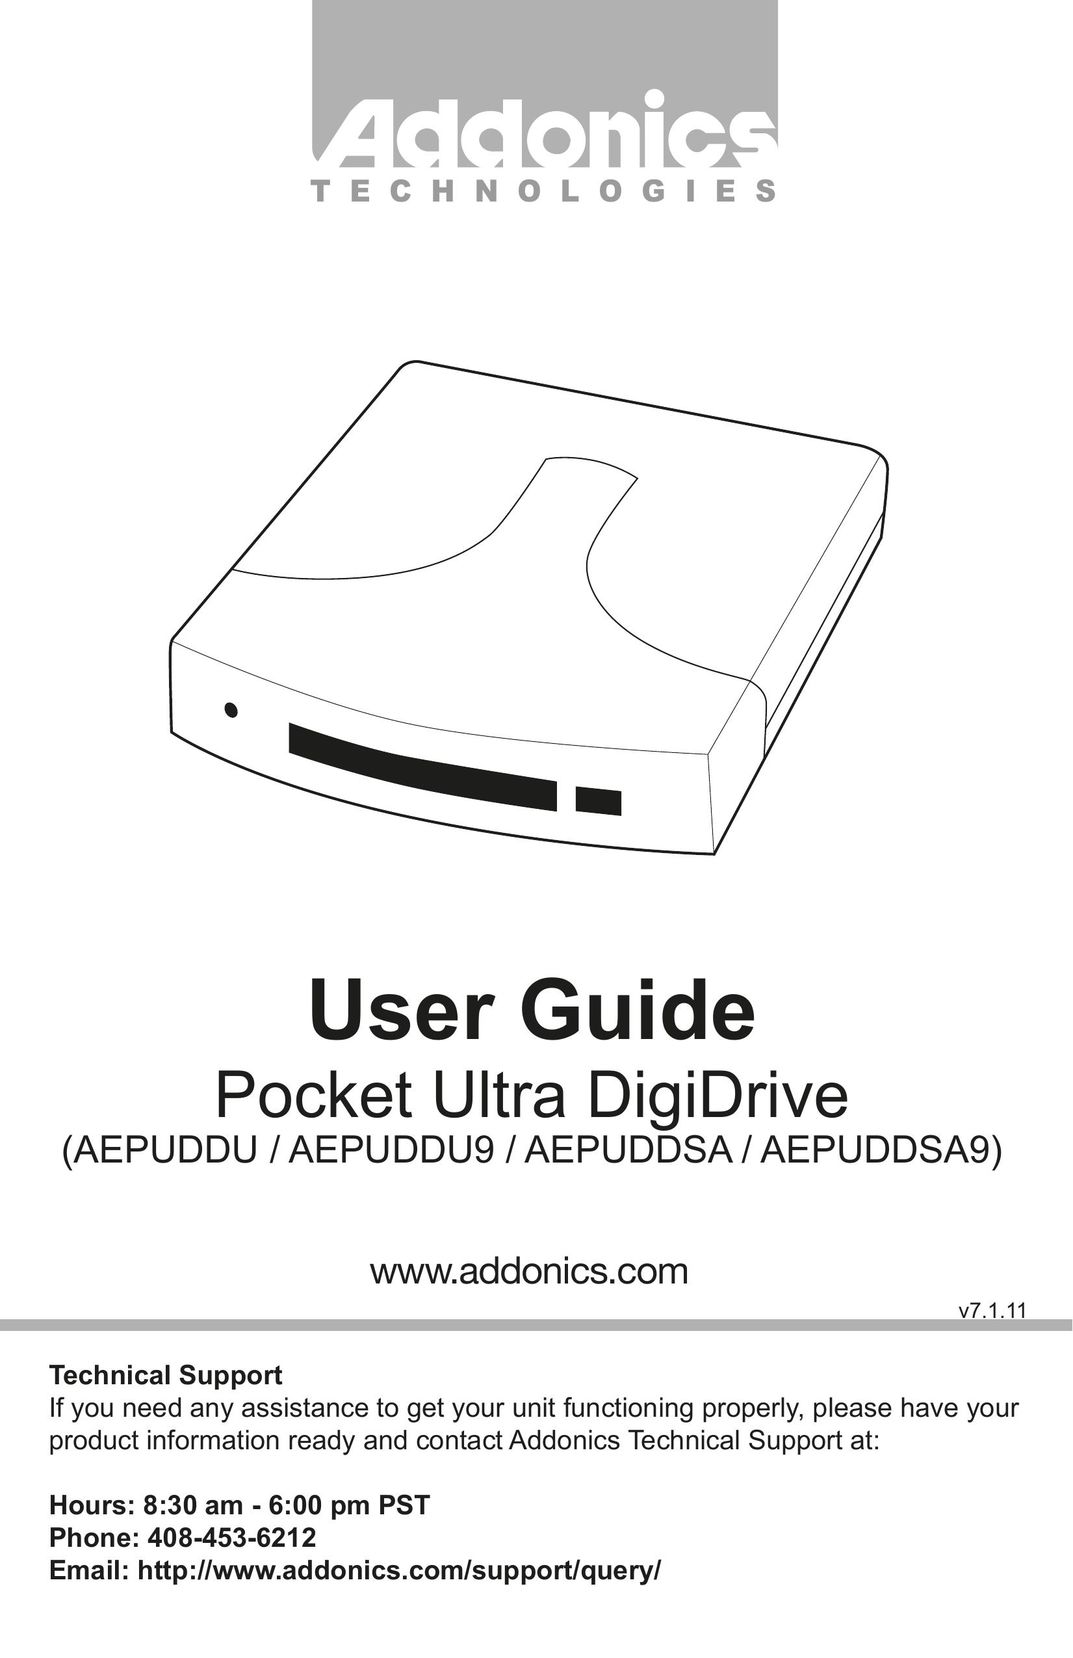 Addonics Technologies AEPUDDSA9 Computer Drive User Manual